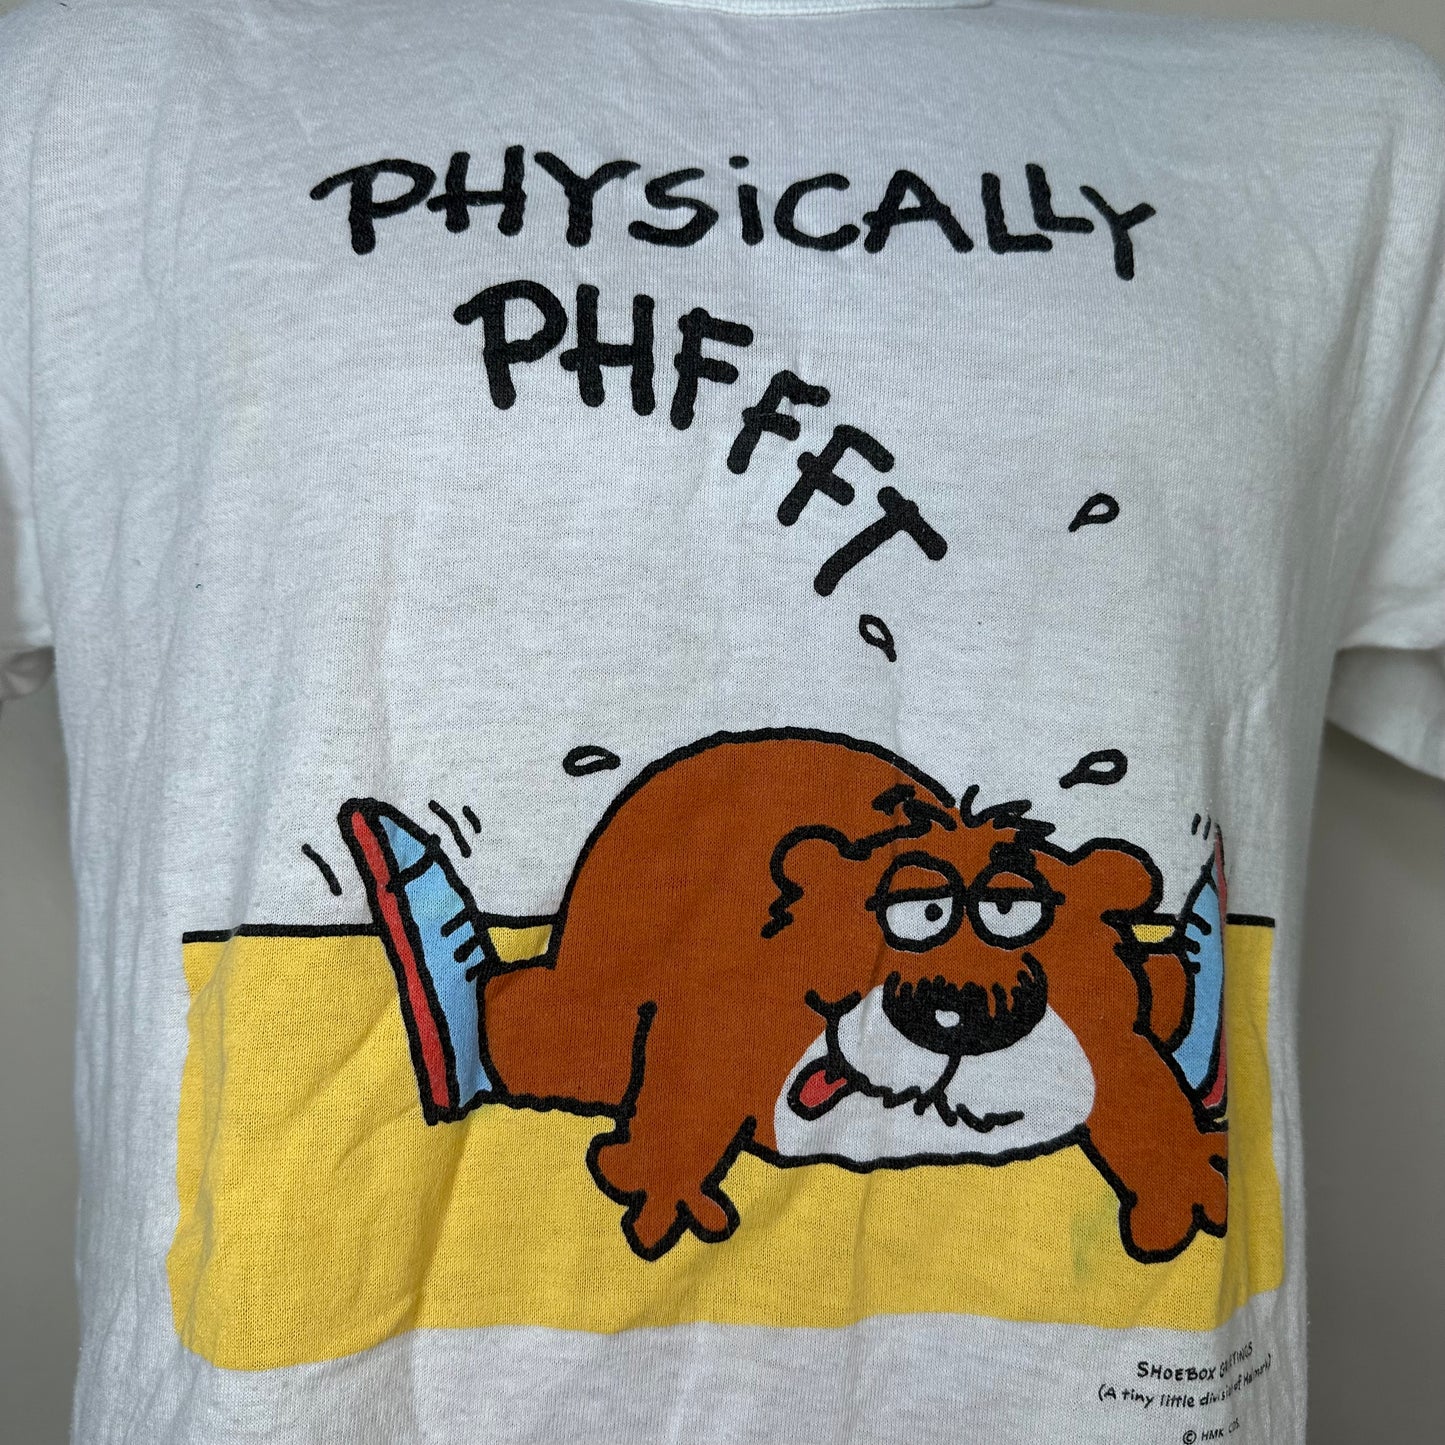 1980s Physically Phffft T-Shirt, Shoebox Greetings Hallmark Size Medium